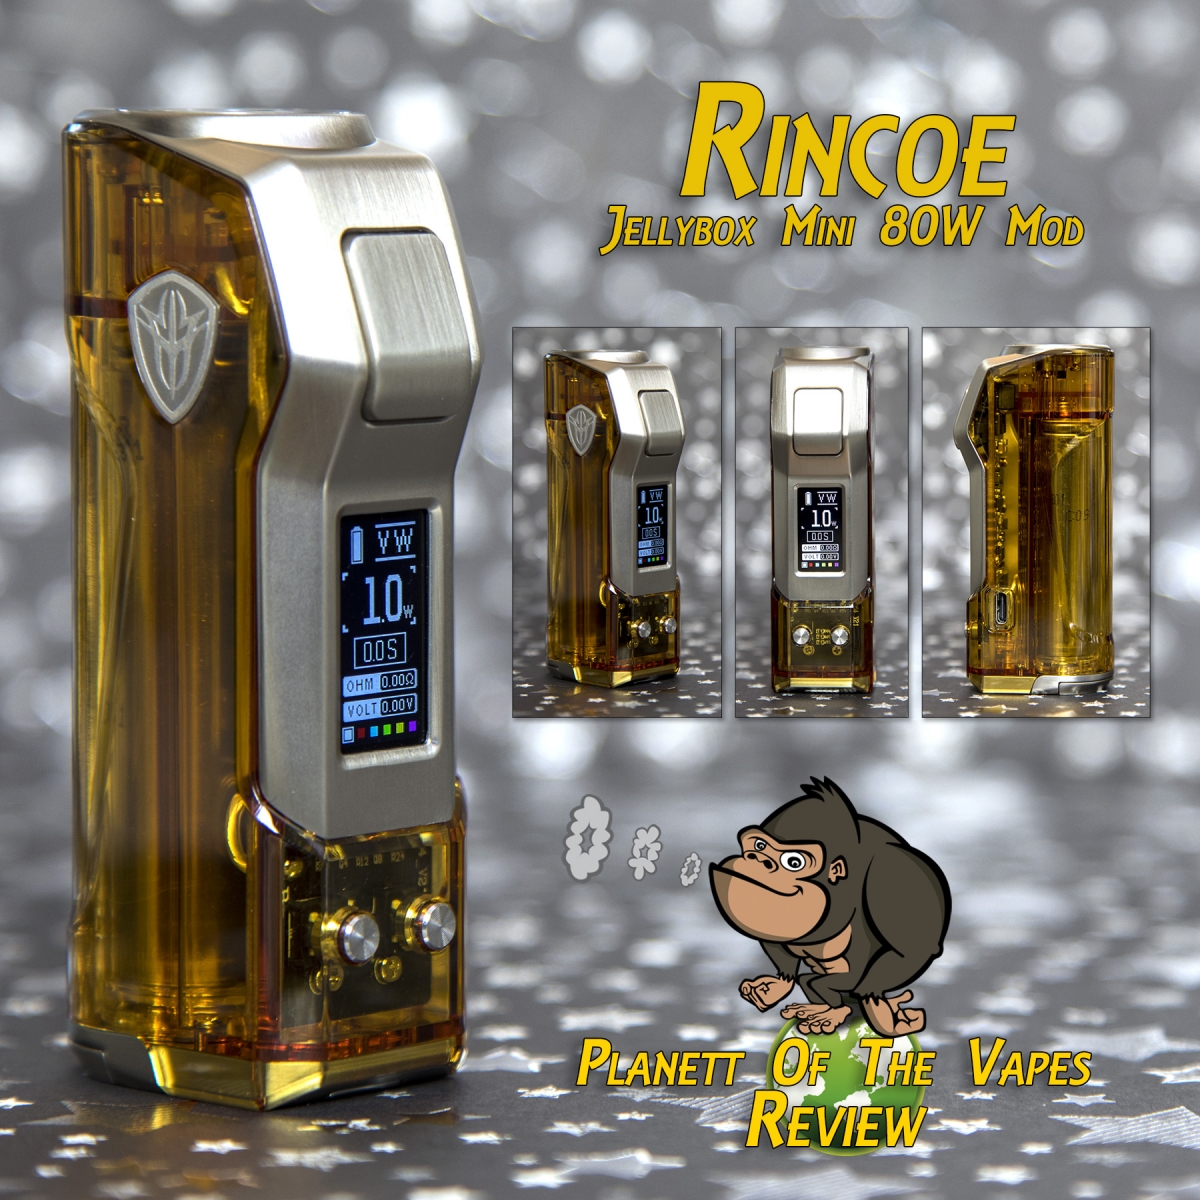 Rincoe Jellybox Mini review